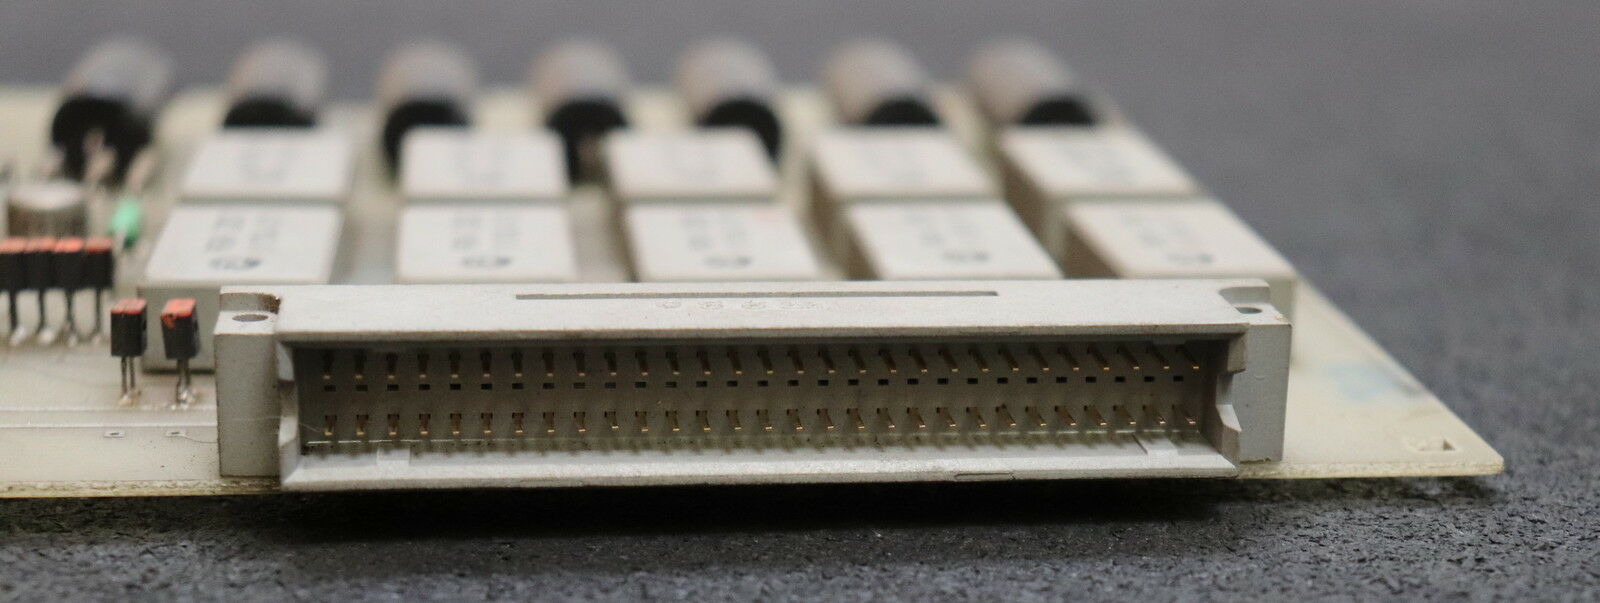 VEM NUMERIK RFT DDR Platine A 75 gebraucht - voll funktionsfähig - geprüft - ok